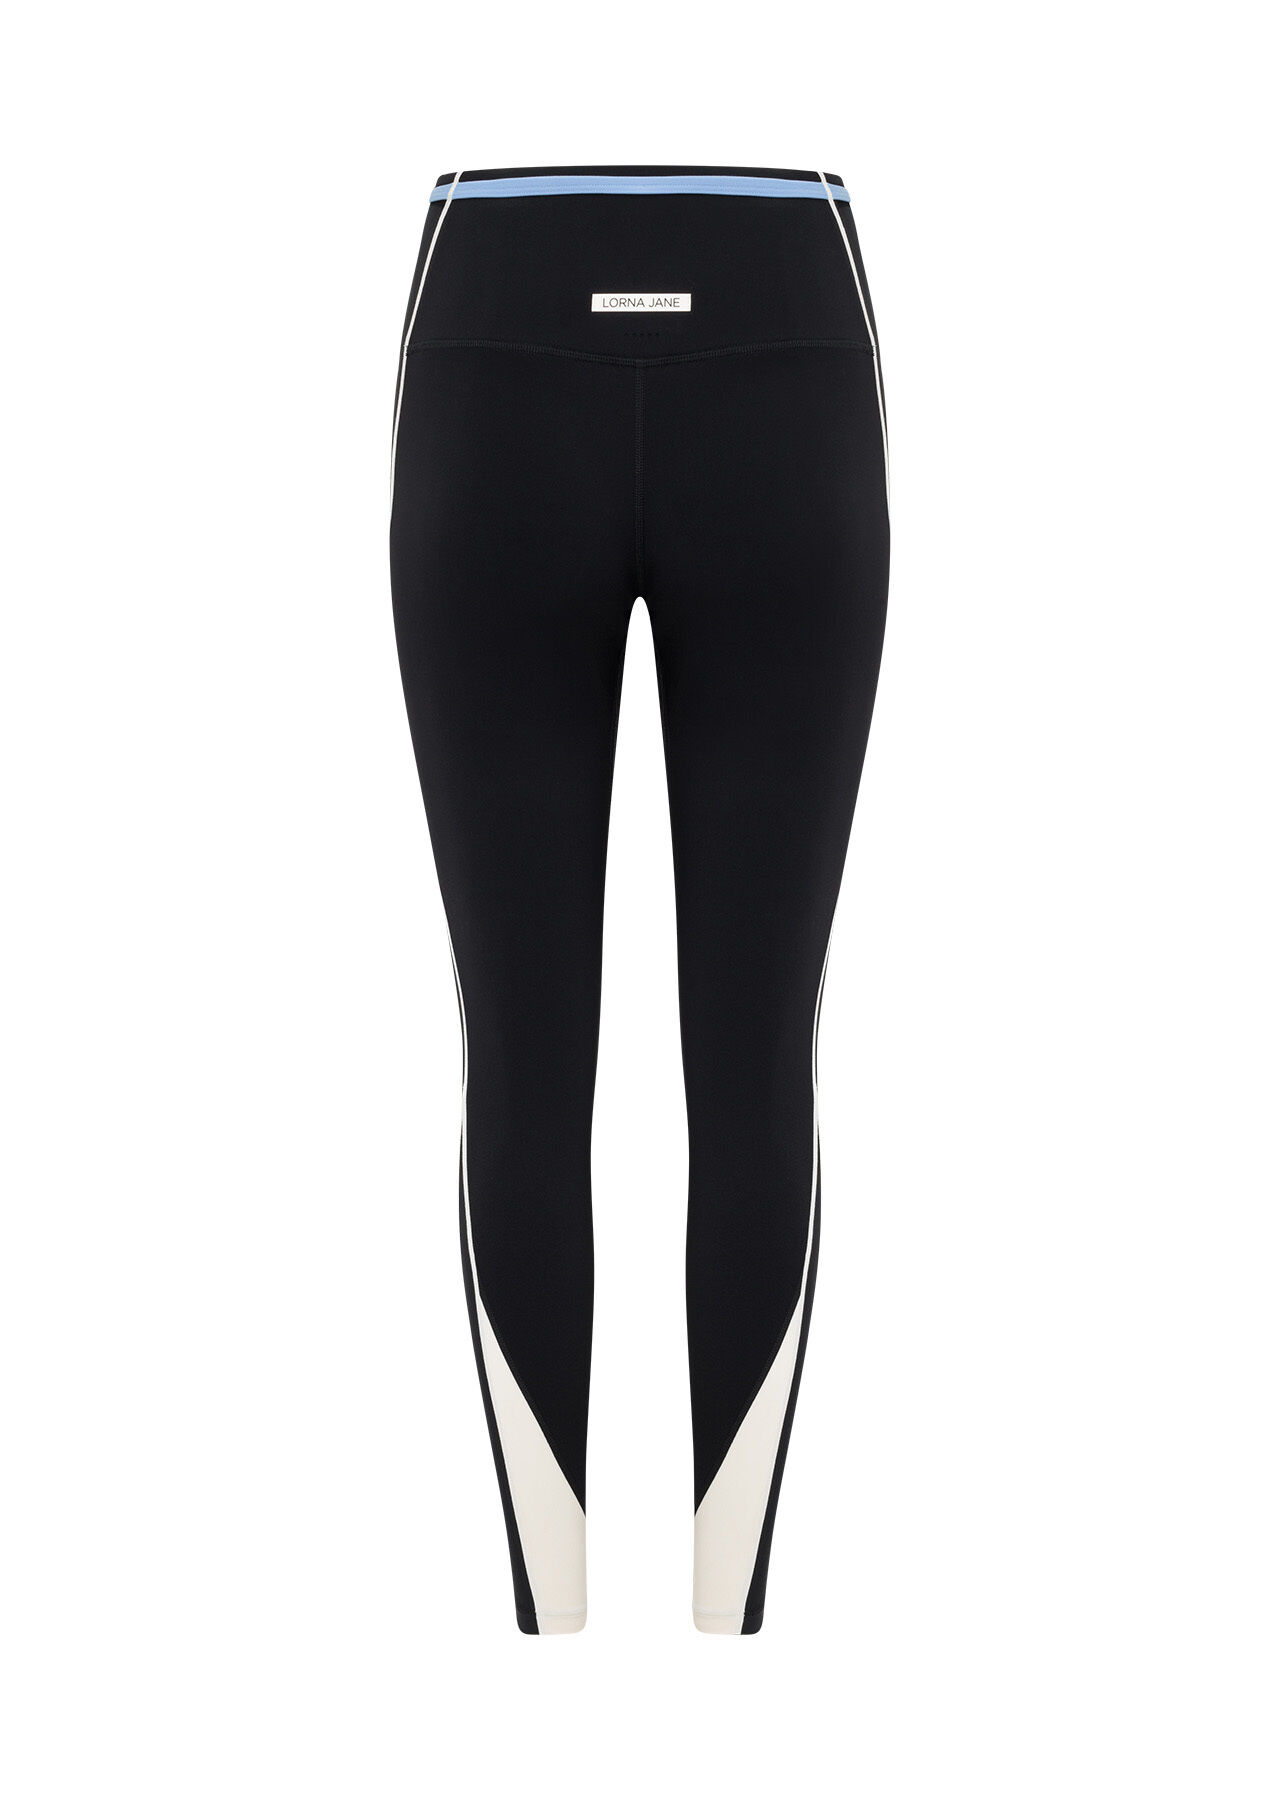 Chlorine Resistant Plus Size Swimwear Australia | Black 3/4 Pant